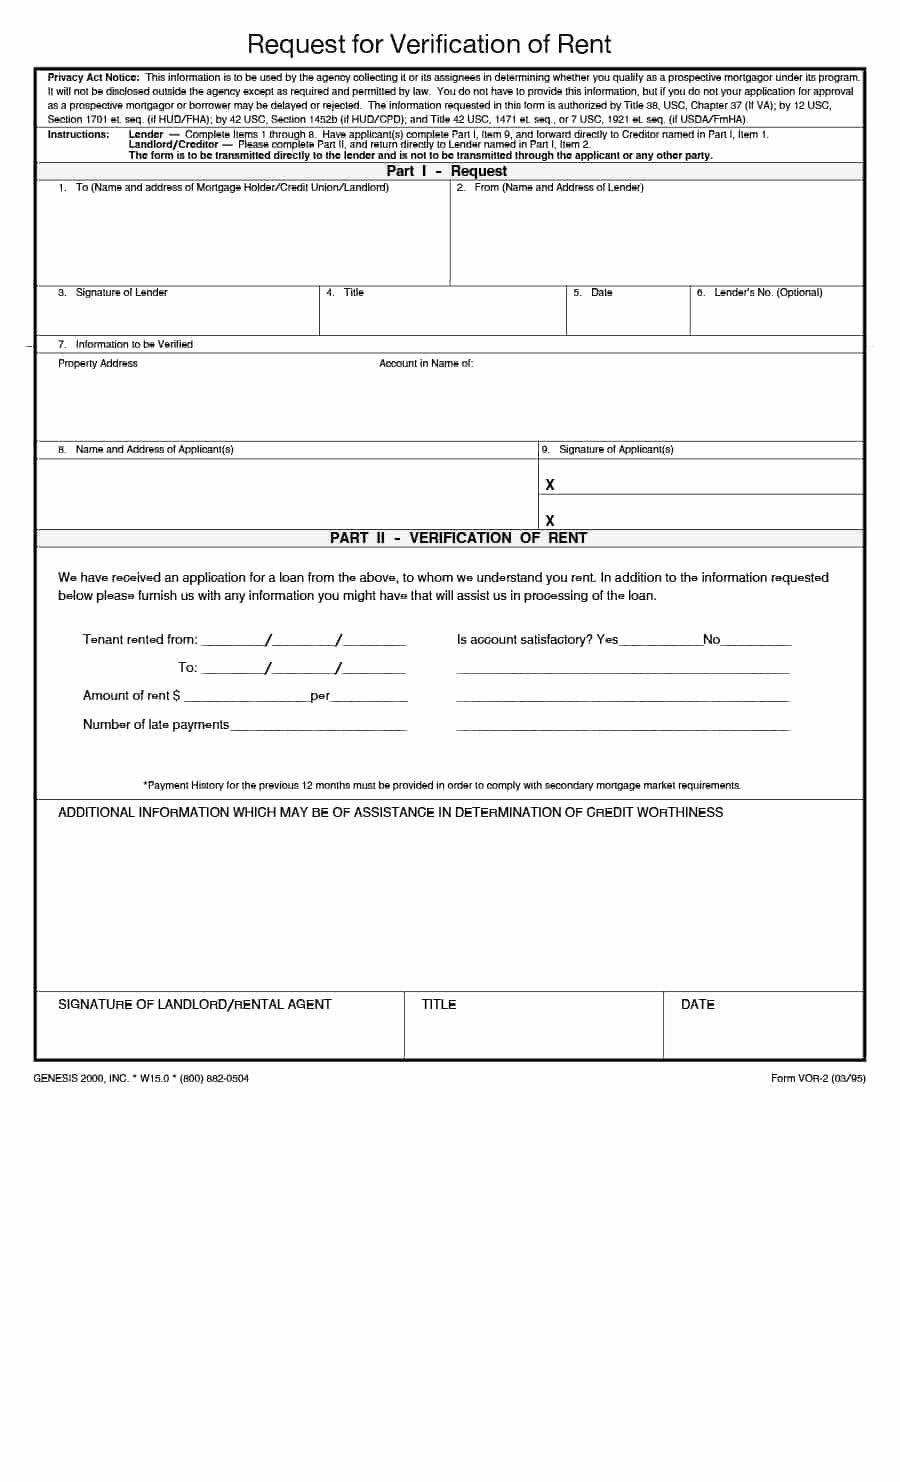 Landlord Verification form Template Lovely 29 Rental Verification forms for Landlord or Tenant